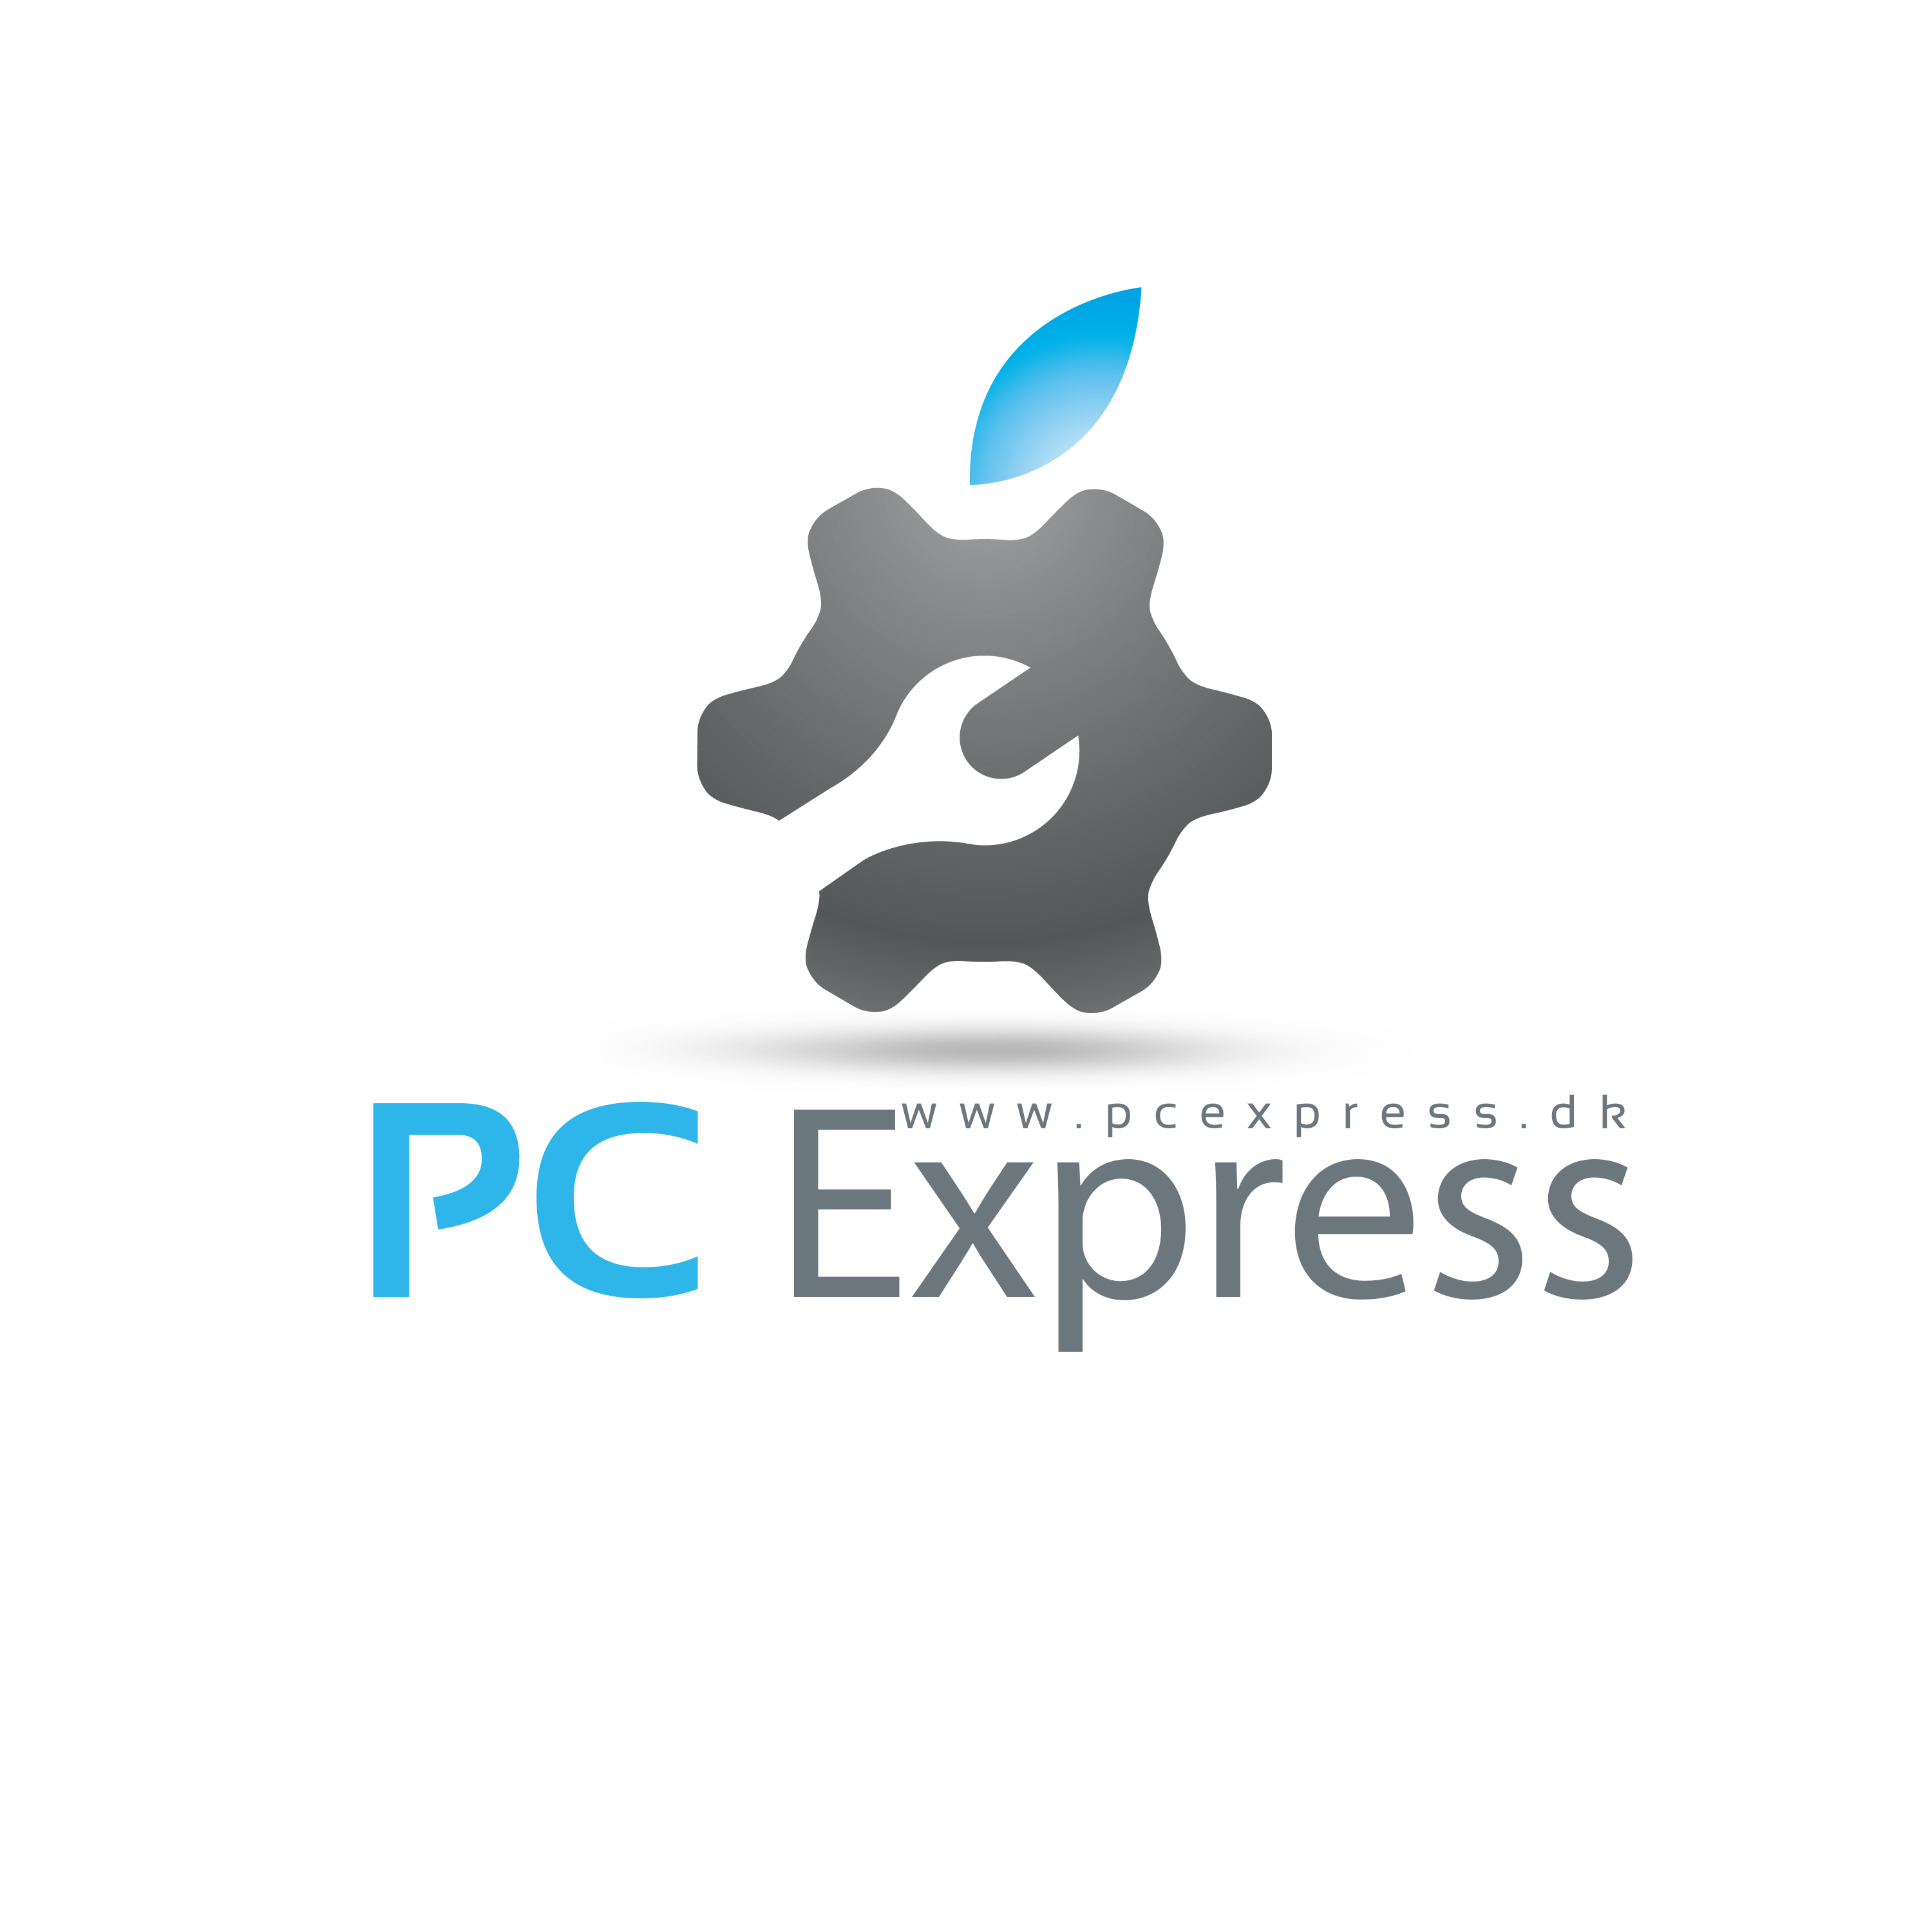 PC Express IVS